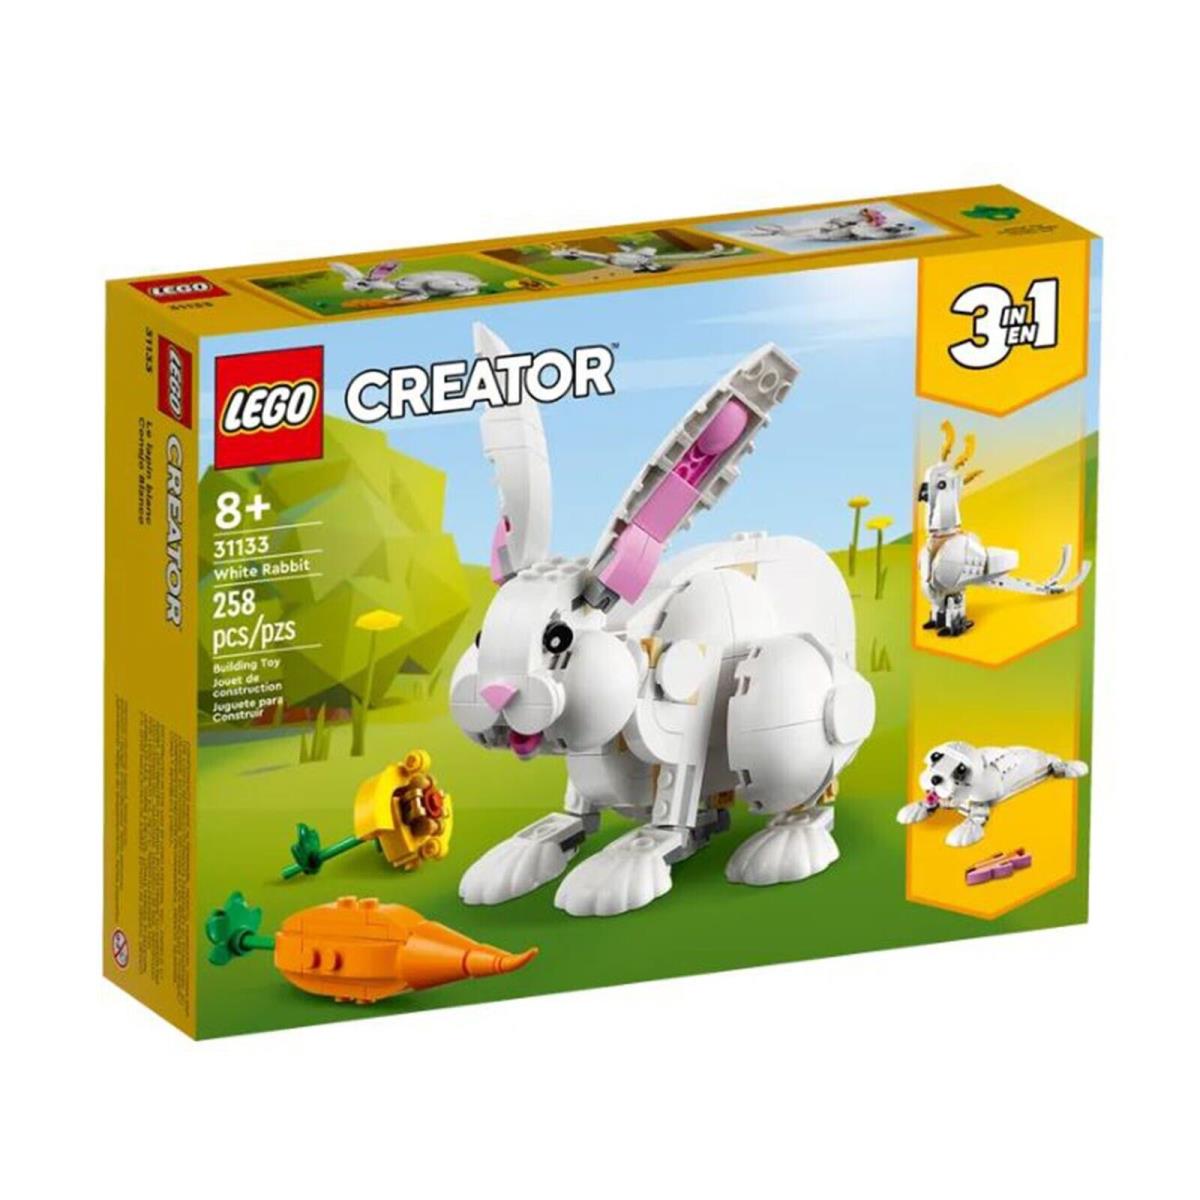 Lego Creator White Rabbit Building Set 31133 IN Stock